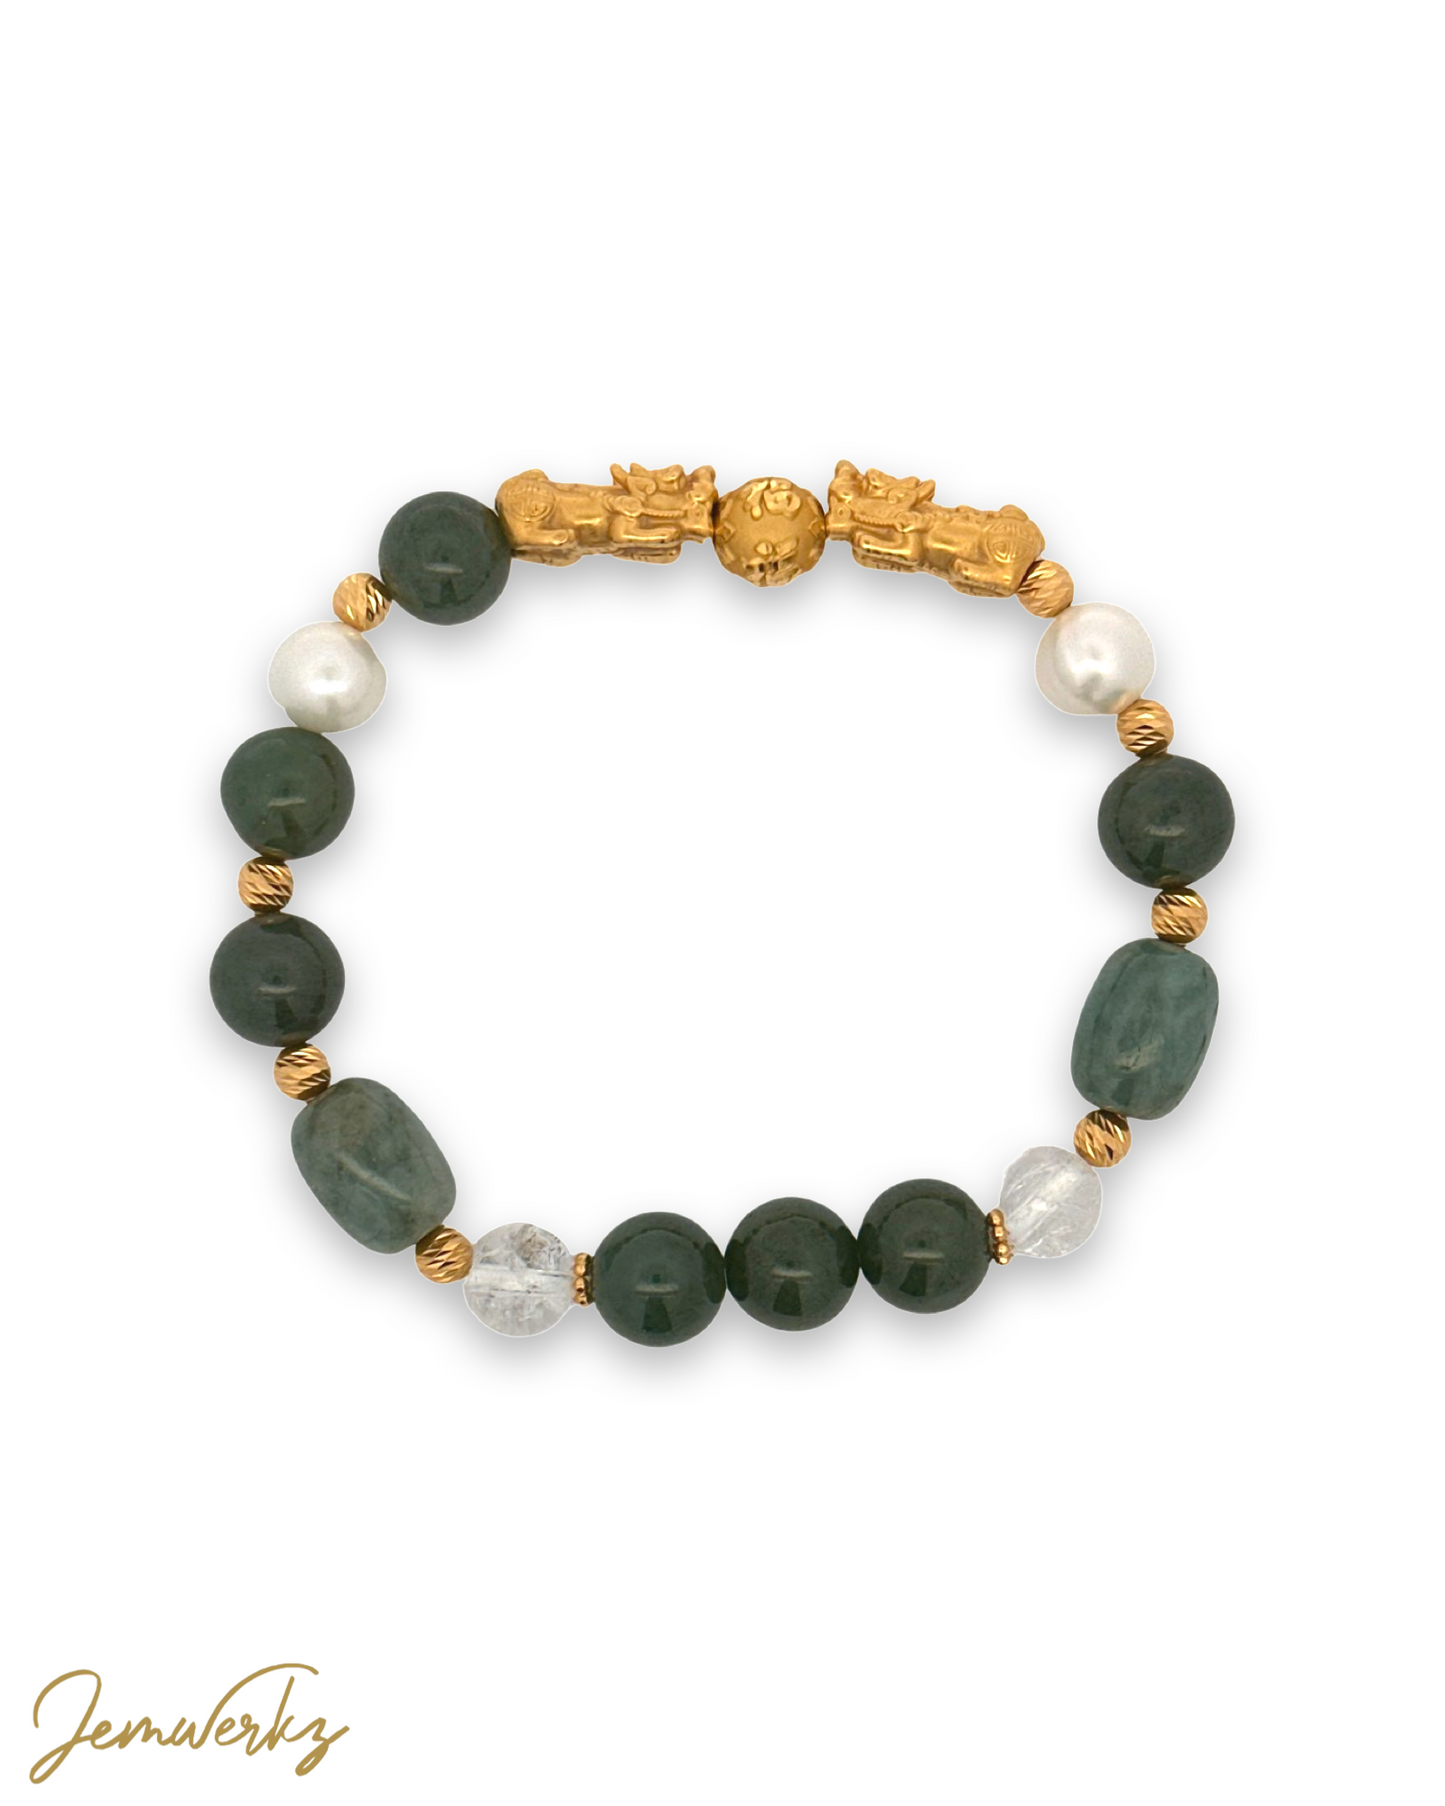 JORDANA GOLD 1.1 - 999 Pure Gold Pixiu with Jade Barrels, Jade, Crackled Clear Quartz, Freshwater Pearls and 916 Gold Spacers Bracelet